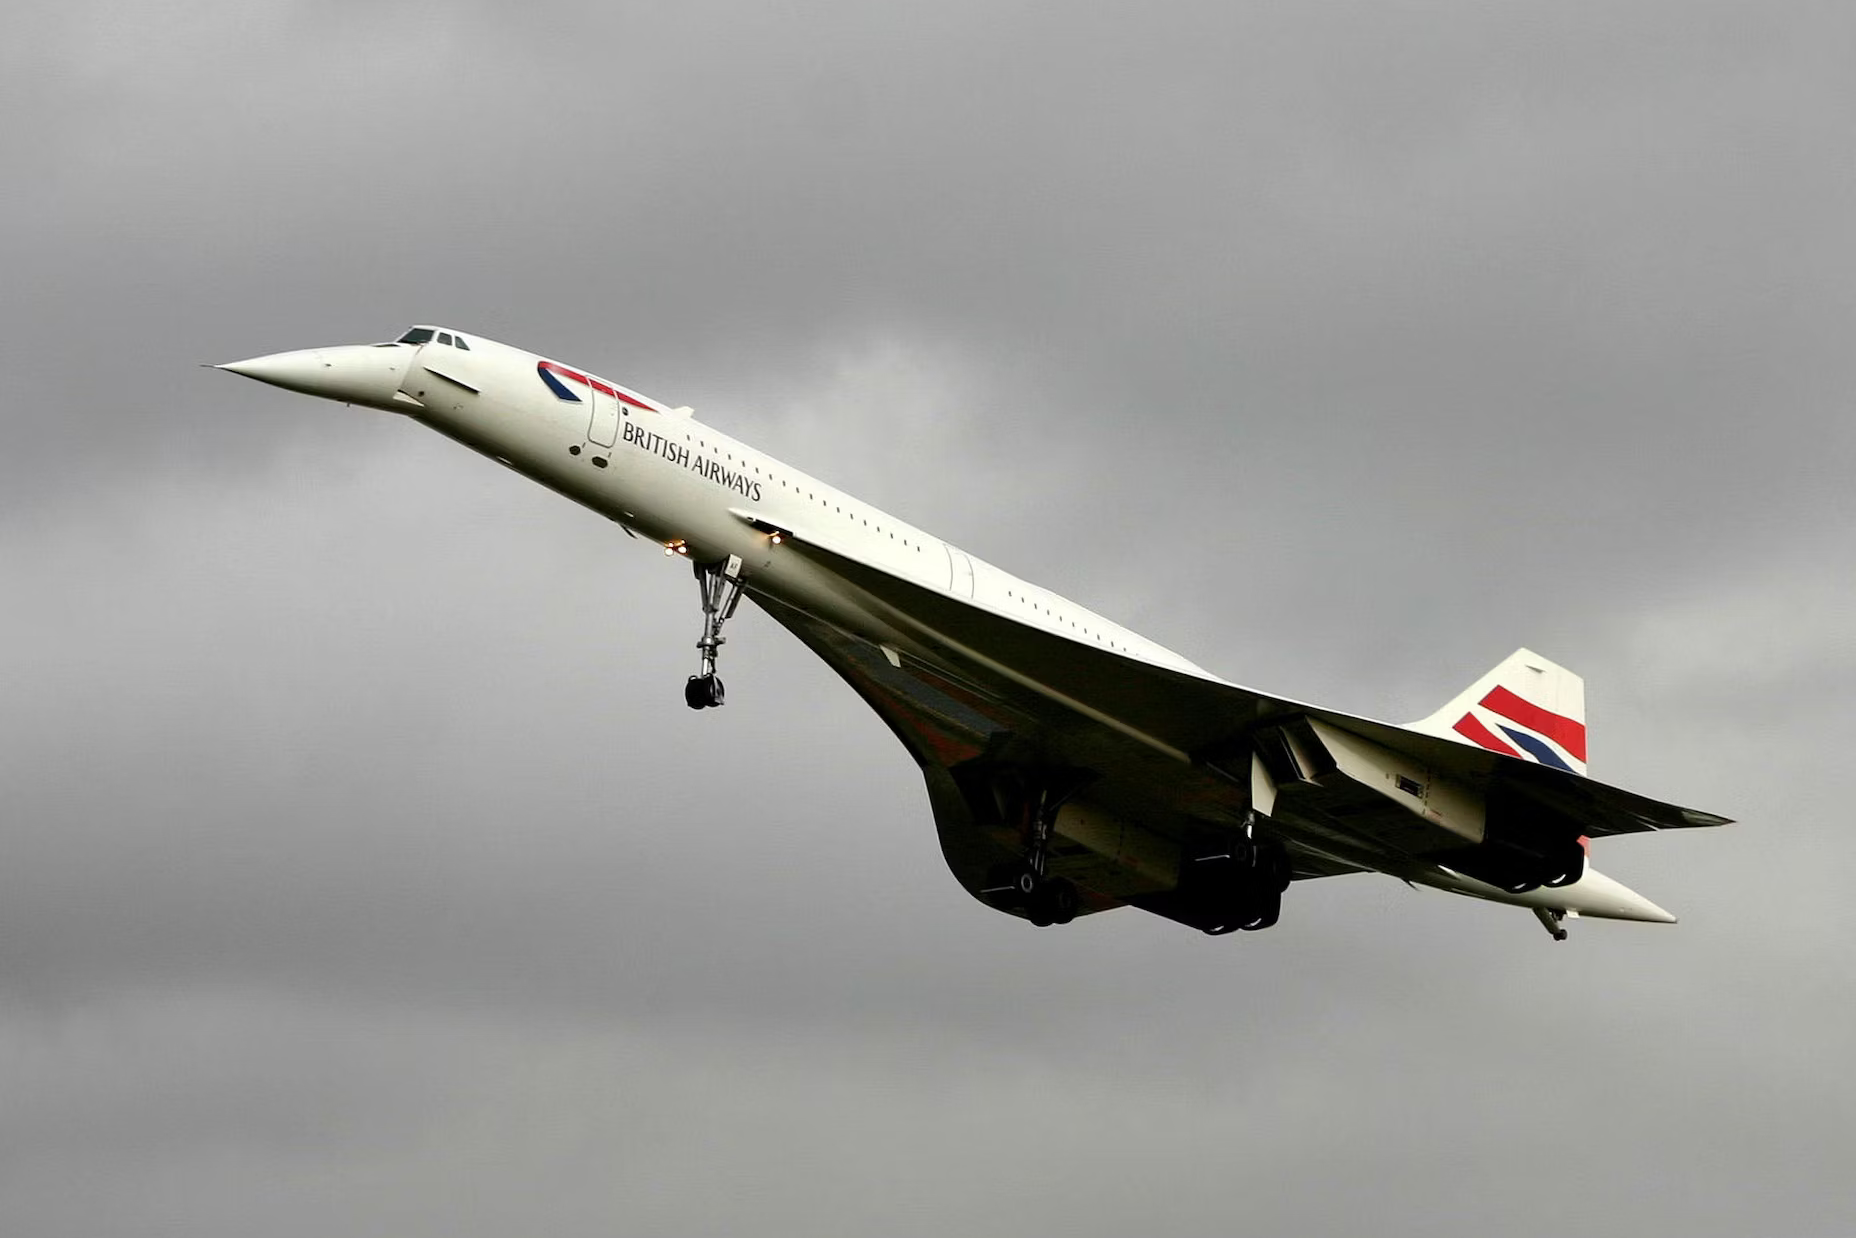 A British Airways Concorde flying below the clouds.